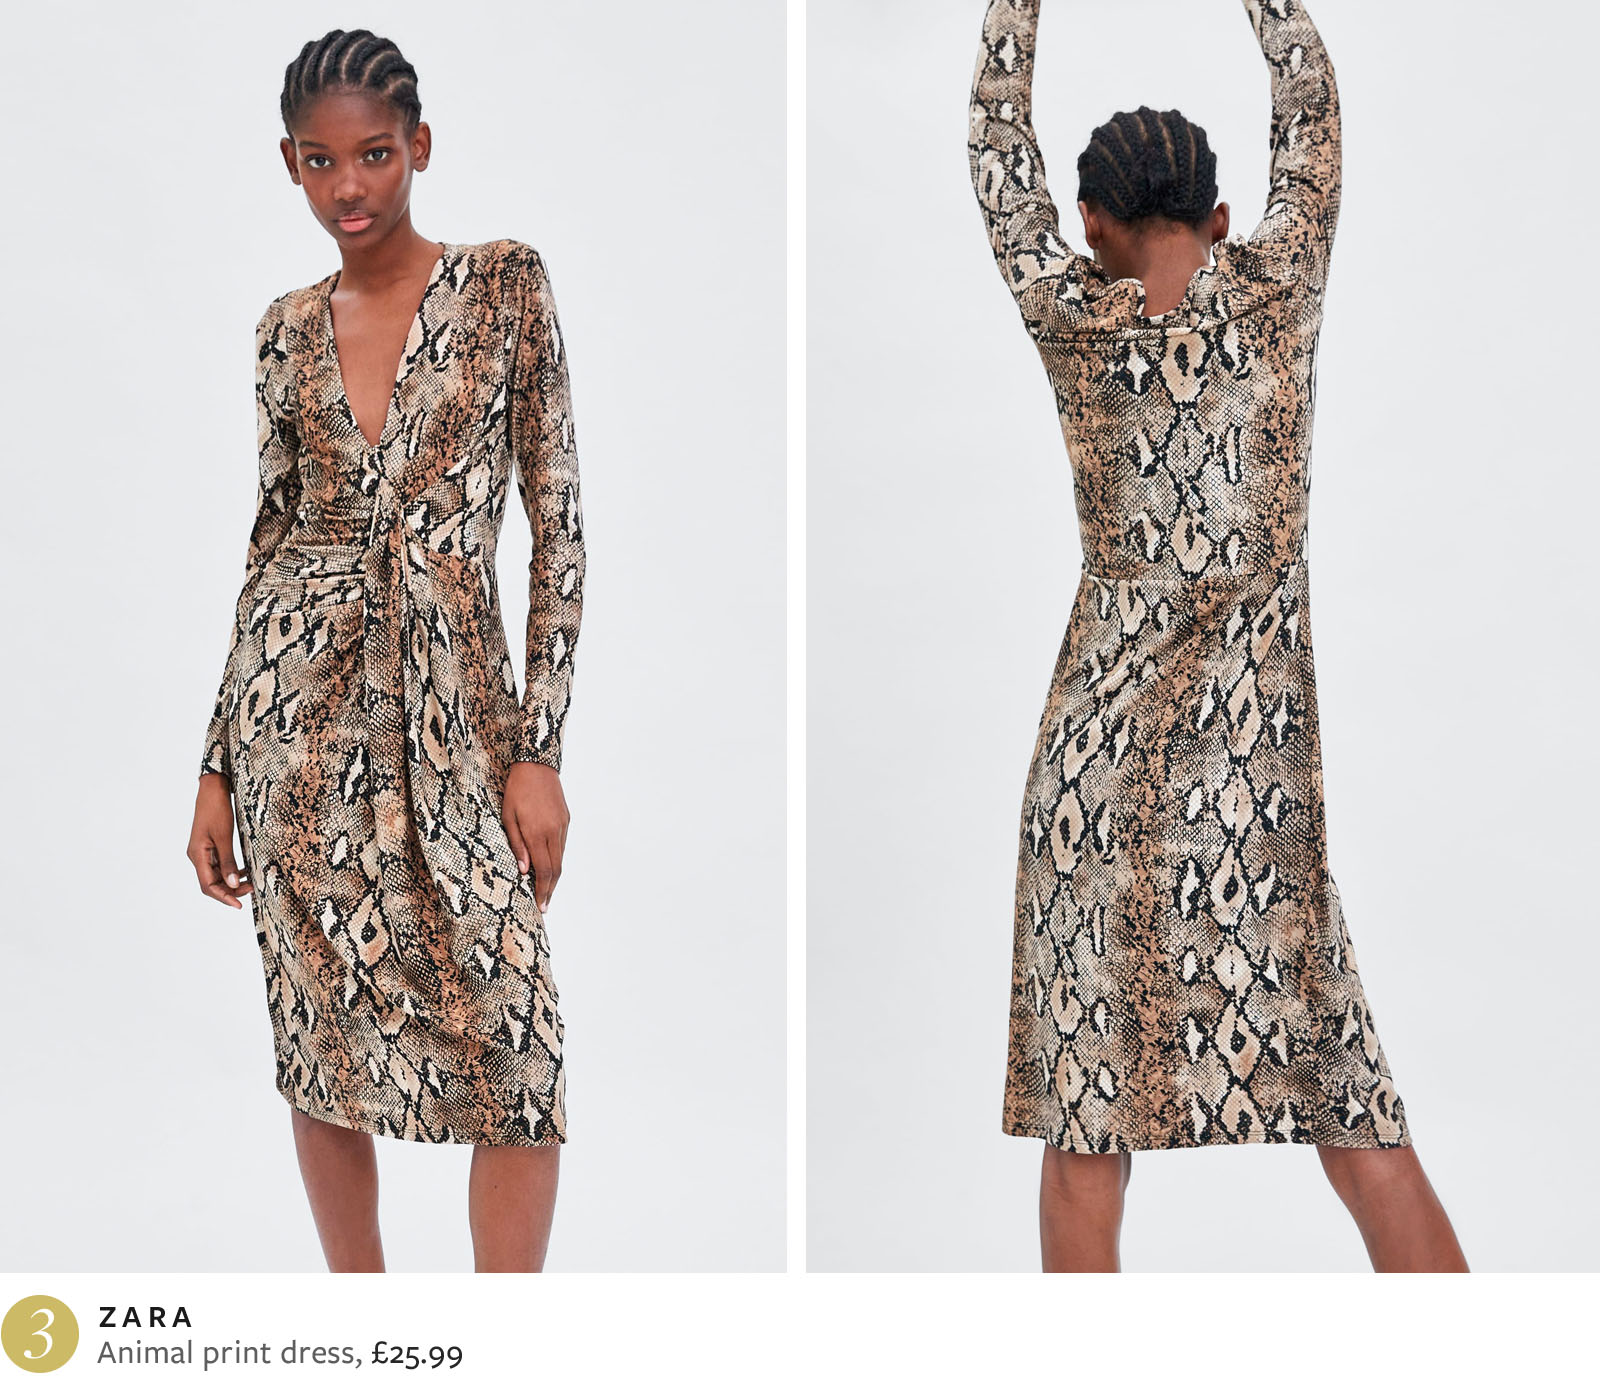 Zara animal print dress